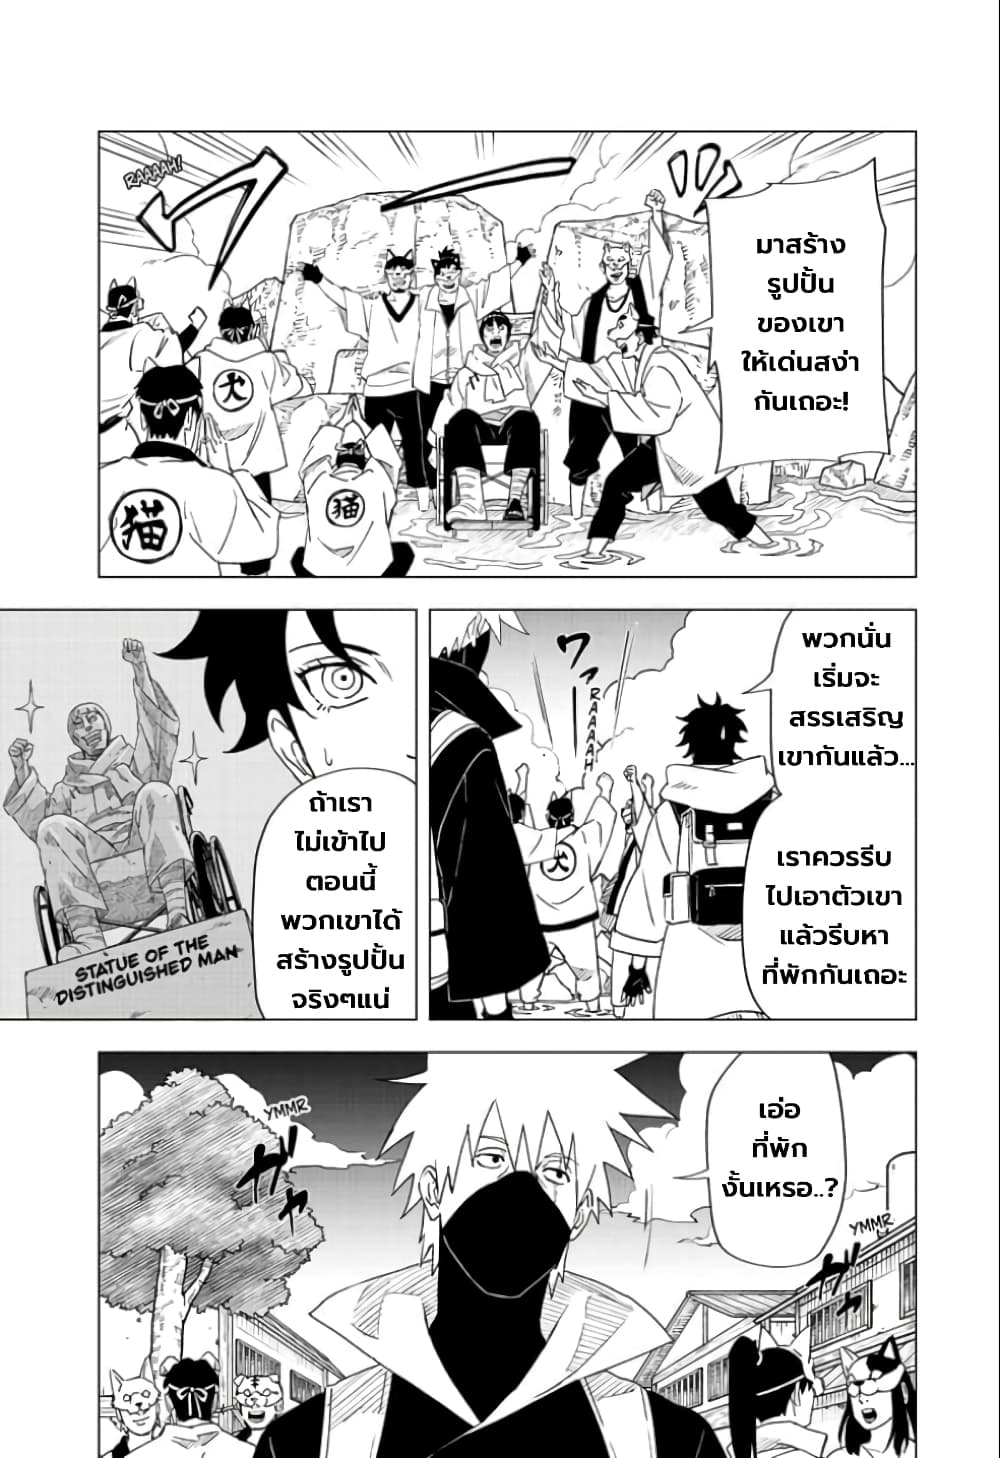 Naruto Konoha’s Story – The Steam Ninja Scrolls The Manga ตอนที่ 6 (15)